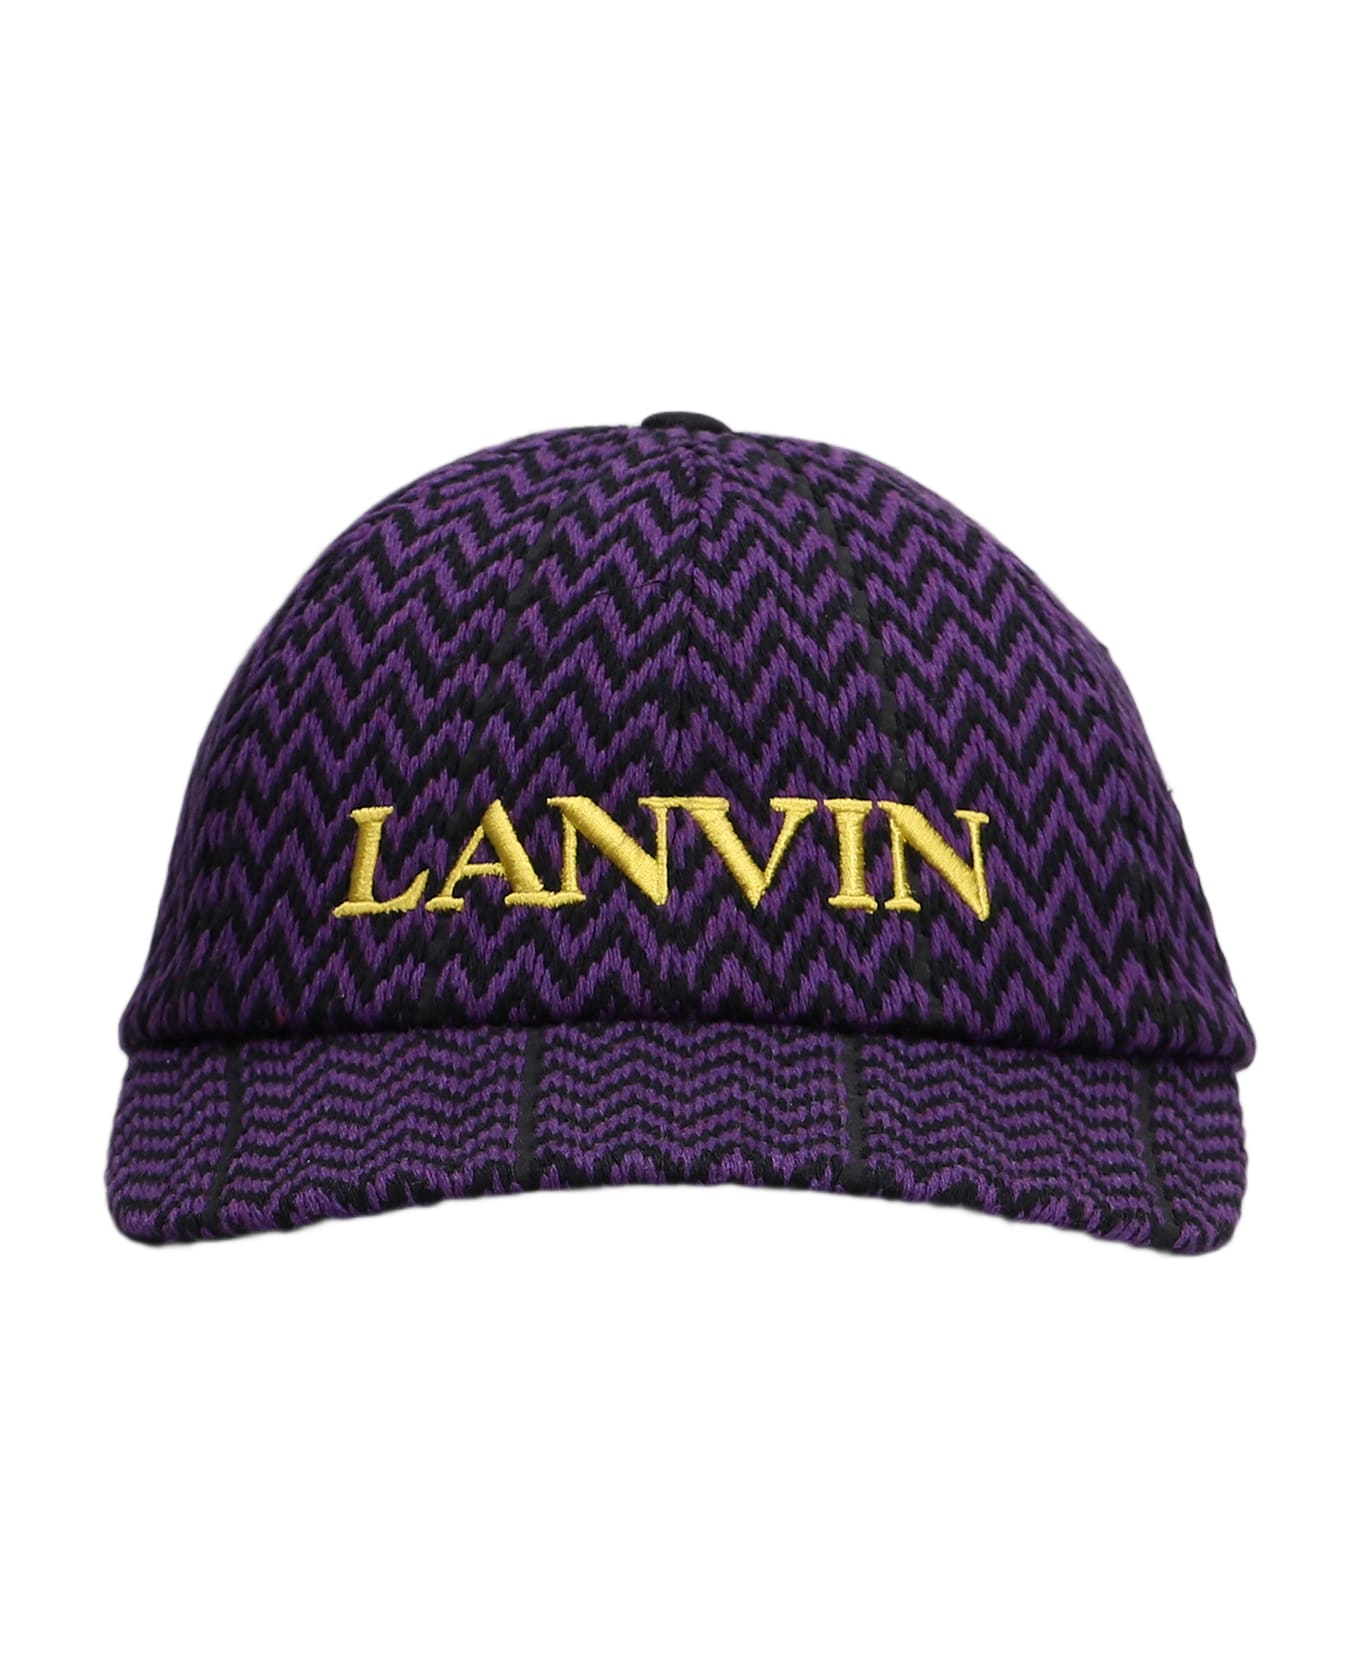 Lanvin Hats In Black Cotton - black